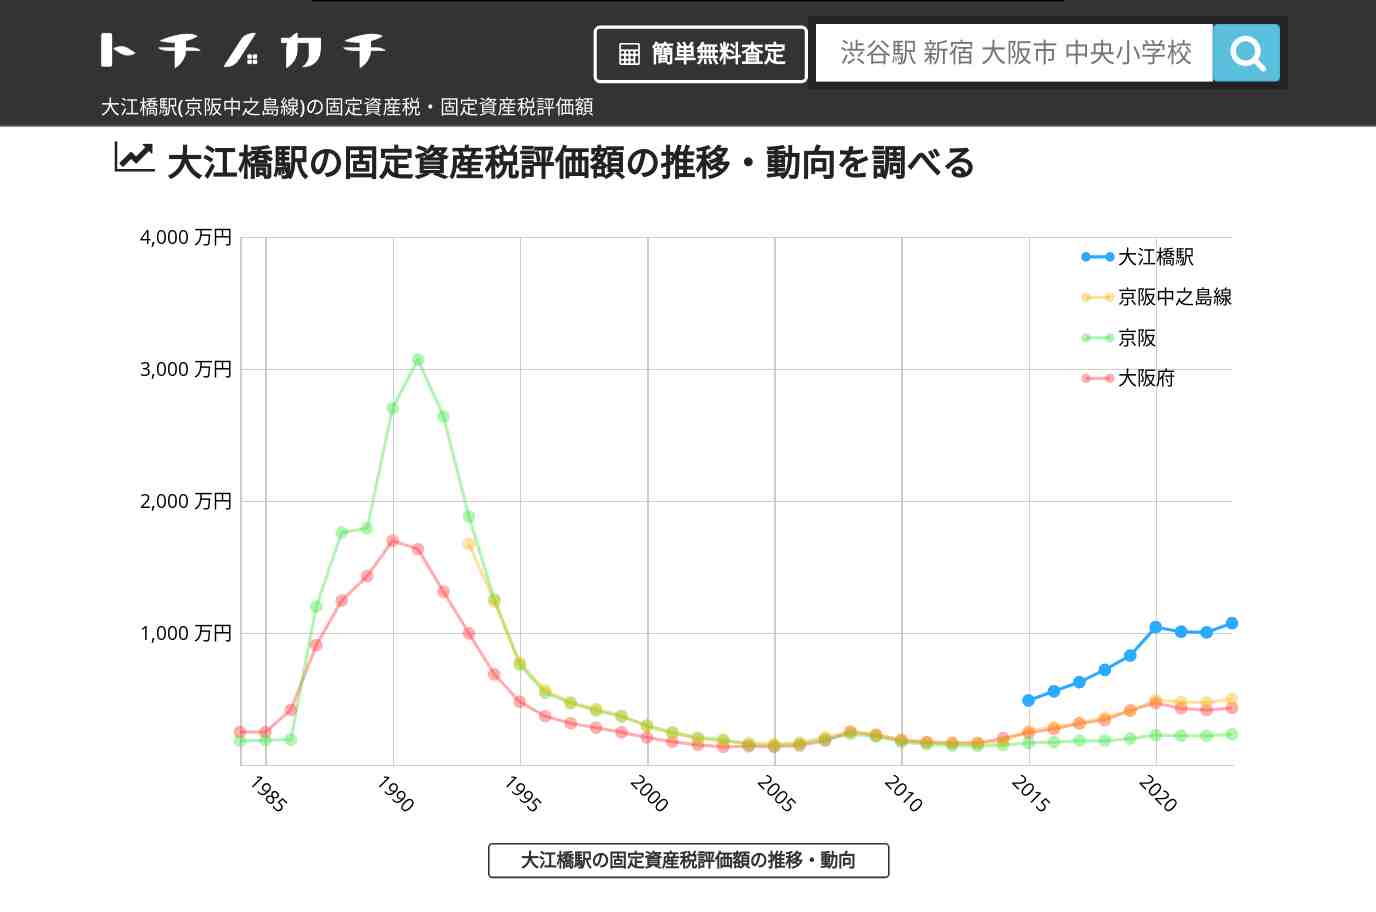 大江橋駅(京阪中之島線)の固定資産税・固定資産税評価額 | トチノカチ